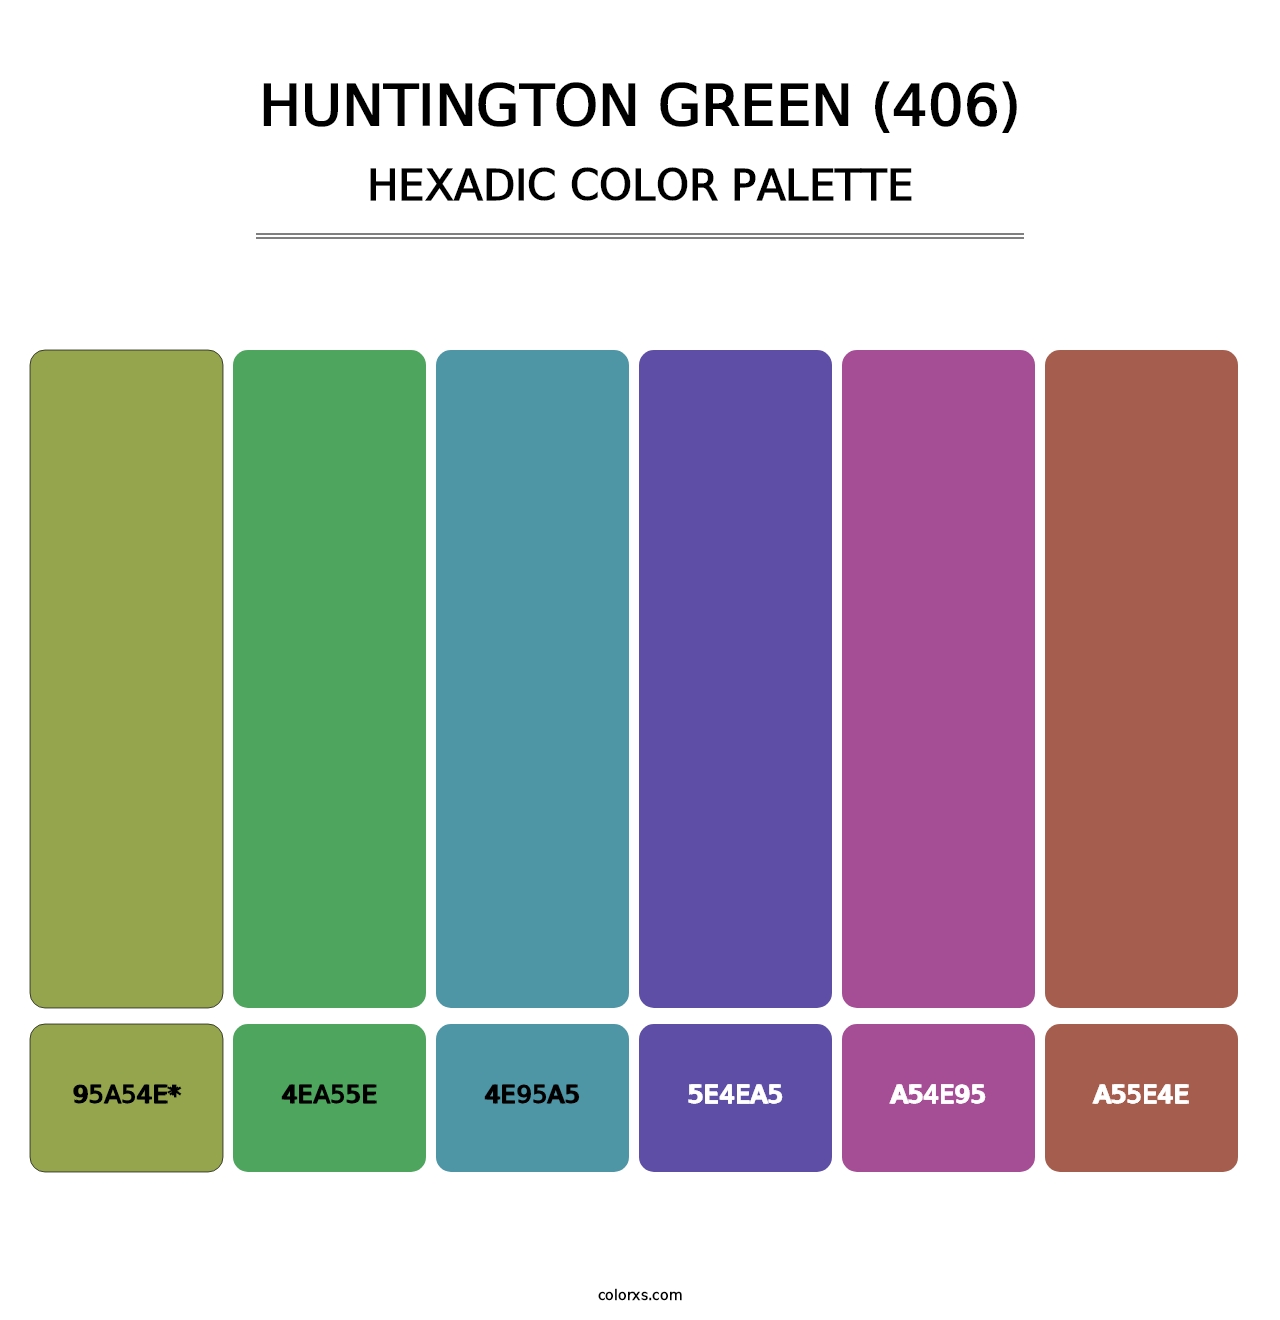 Huntington Green (406) - Hexadic Color Palette